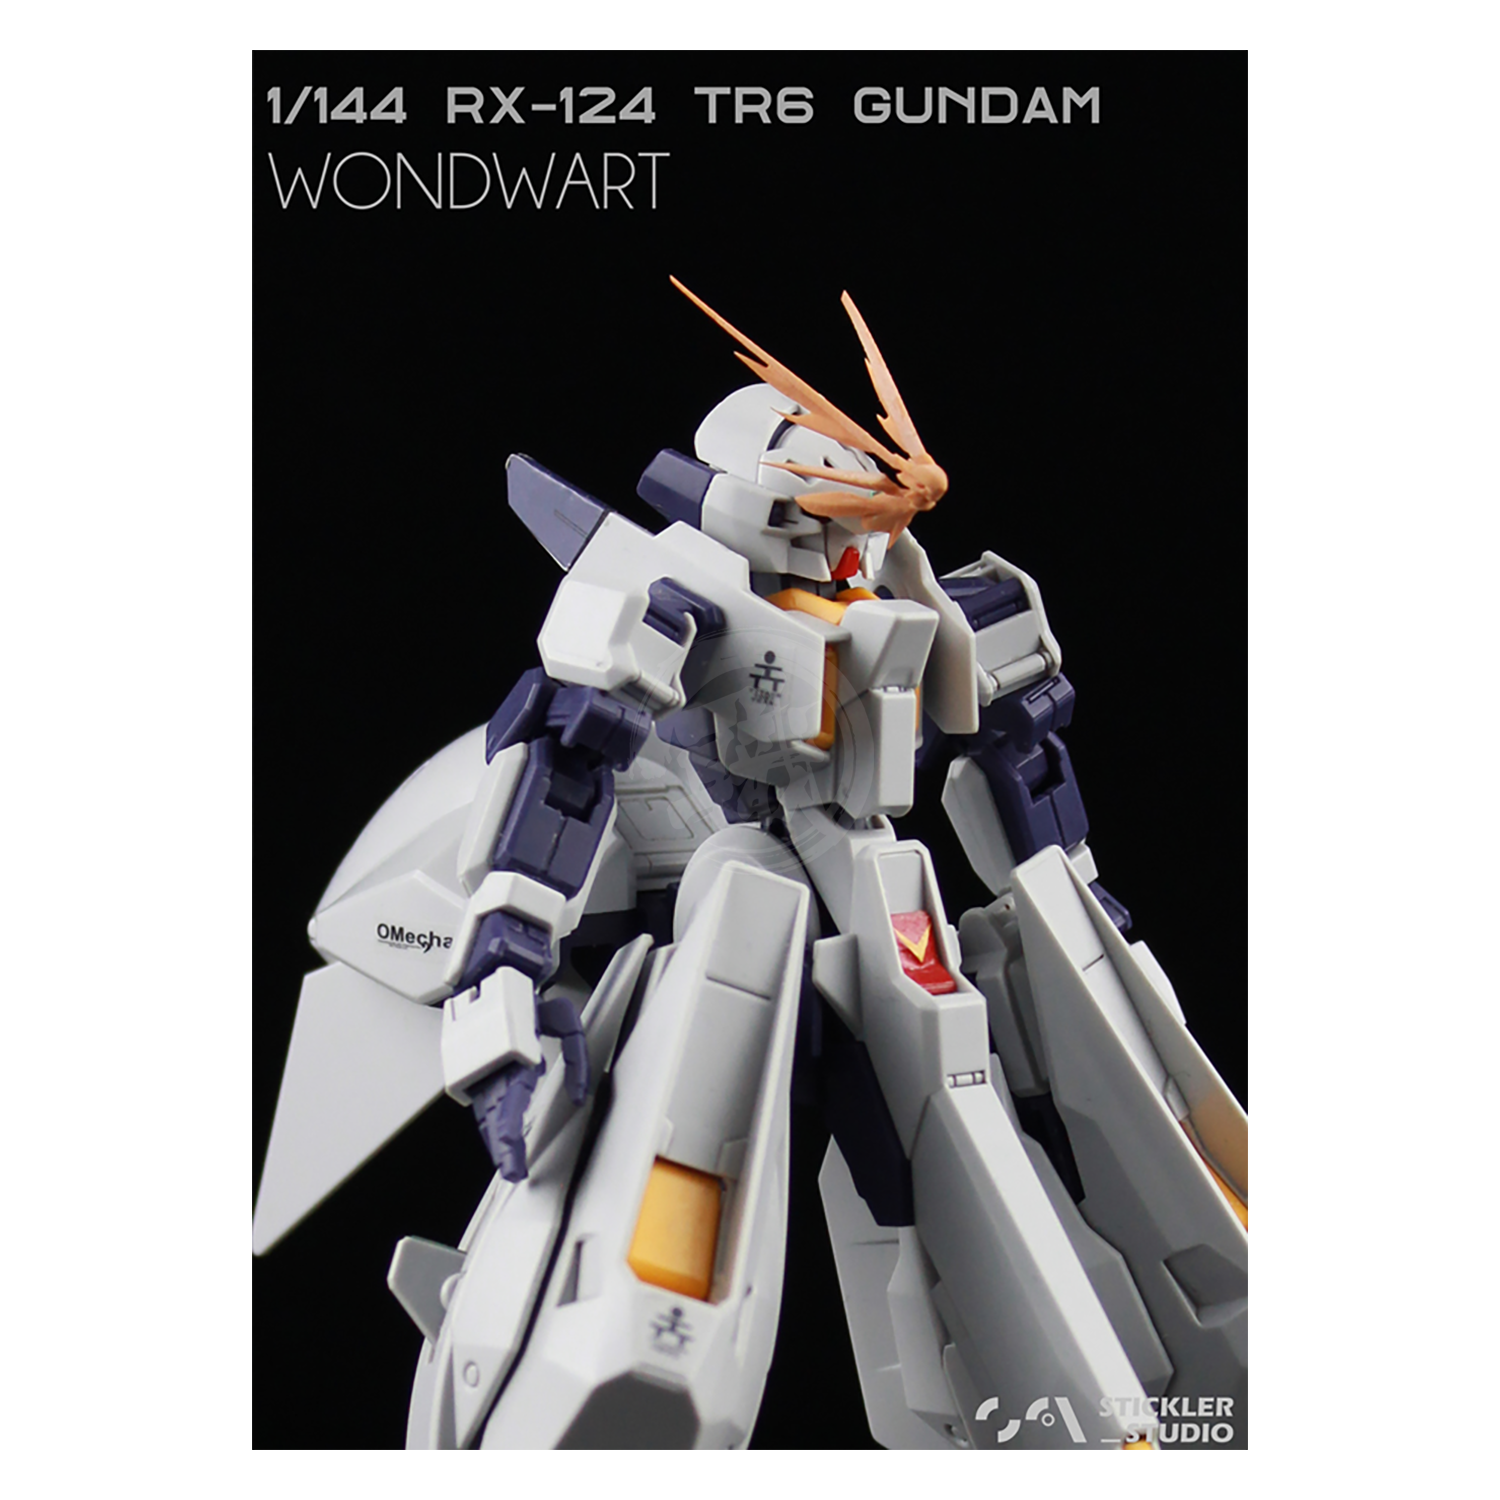 Stickler Studio - Flying Goddess Statue" Resin Antenna Replacement for Gundam TR-6 - ShokuninGunpla